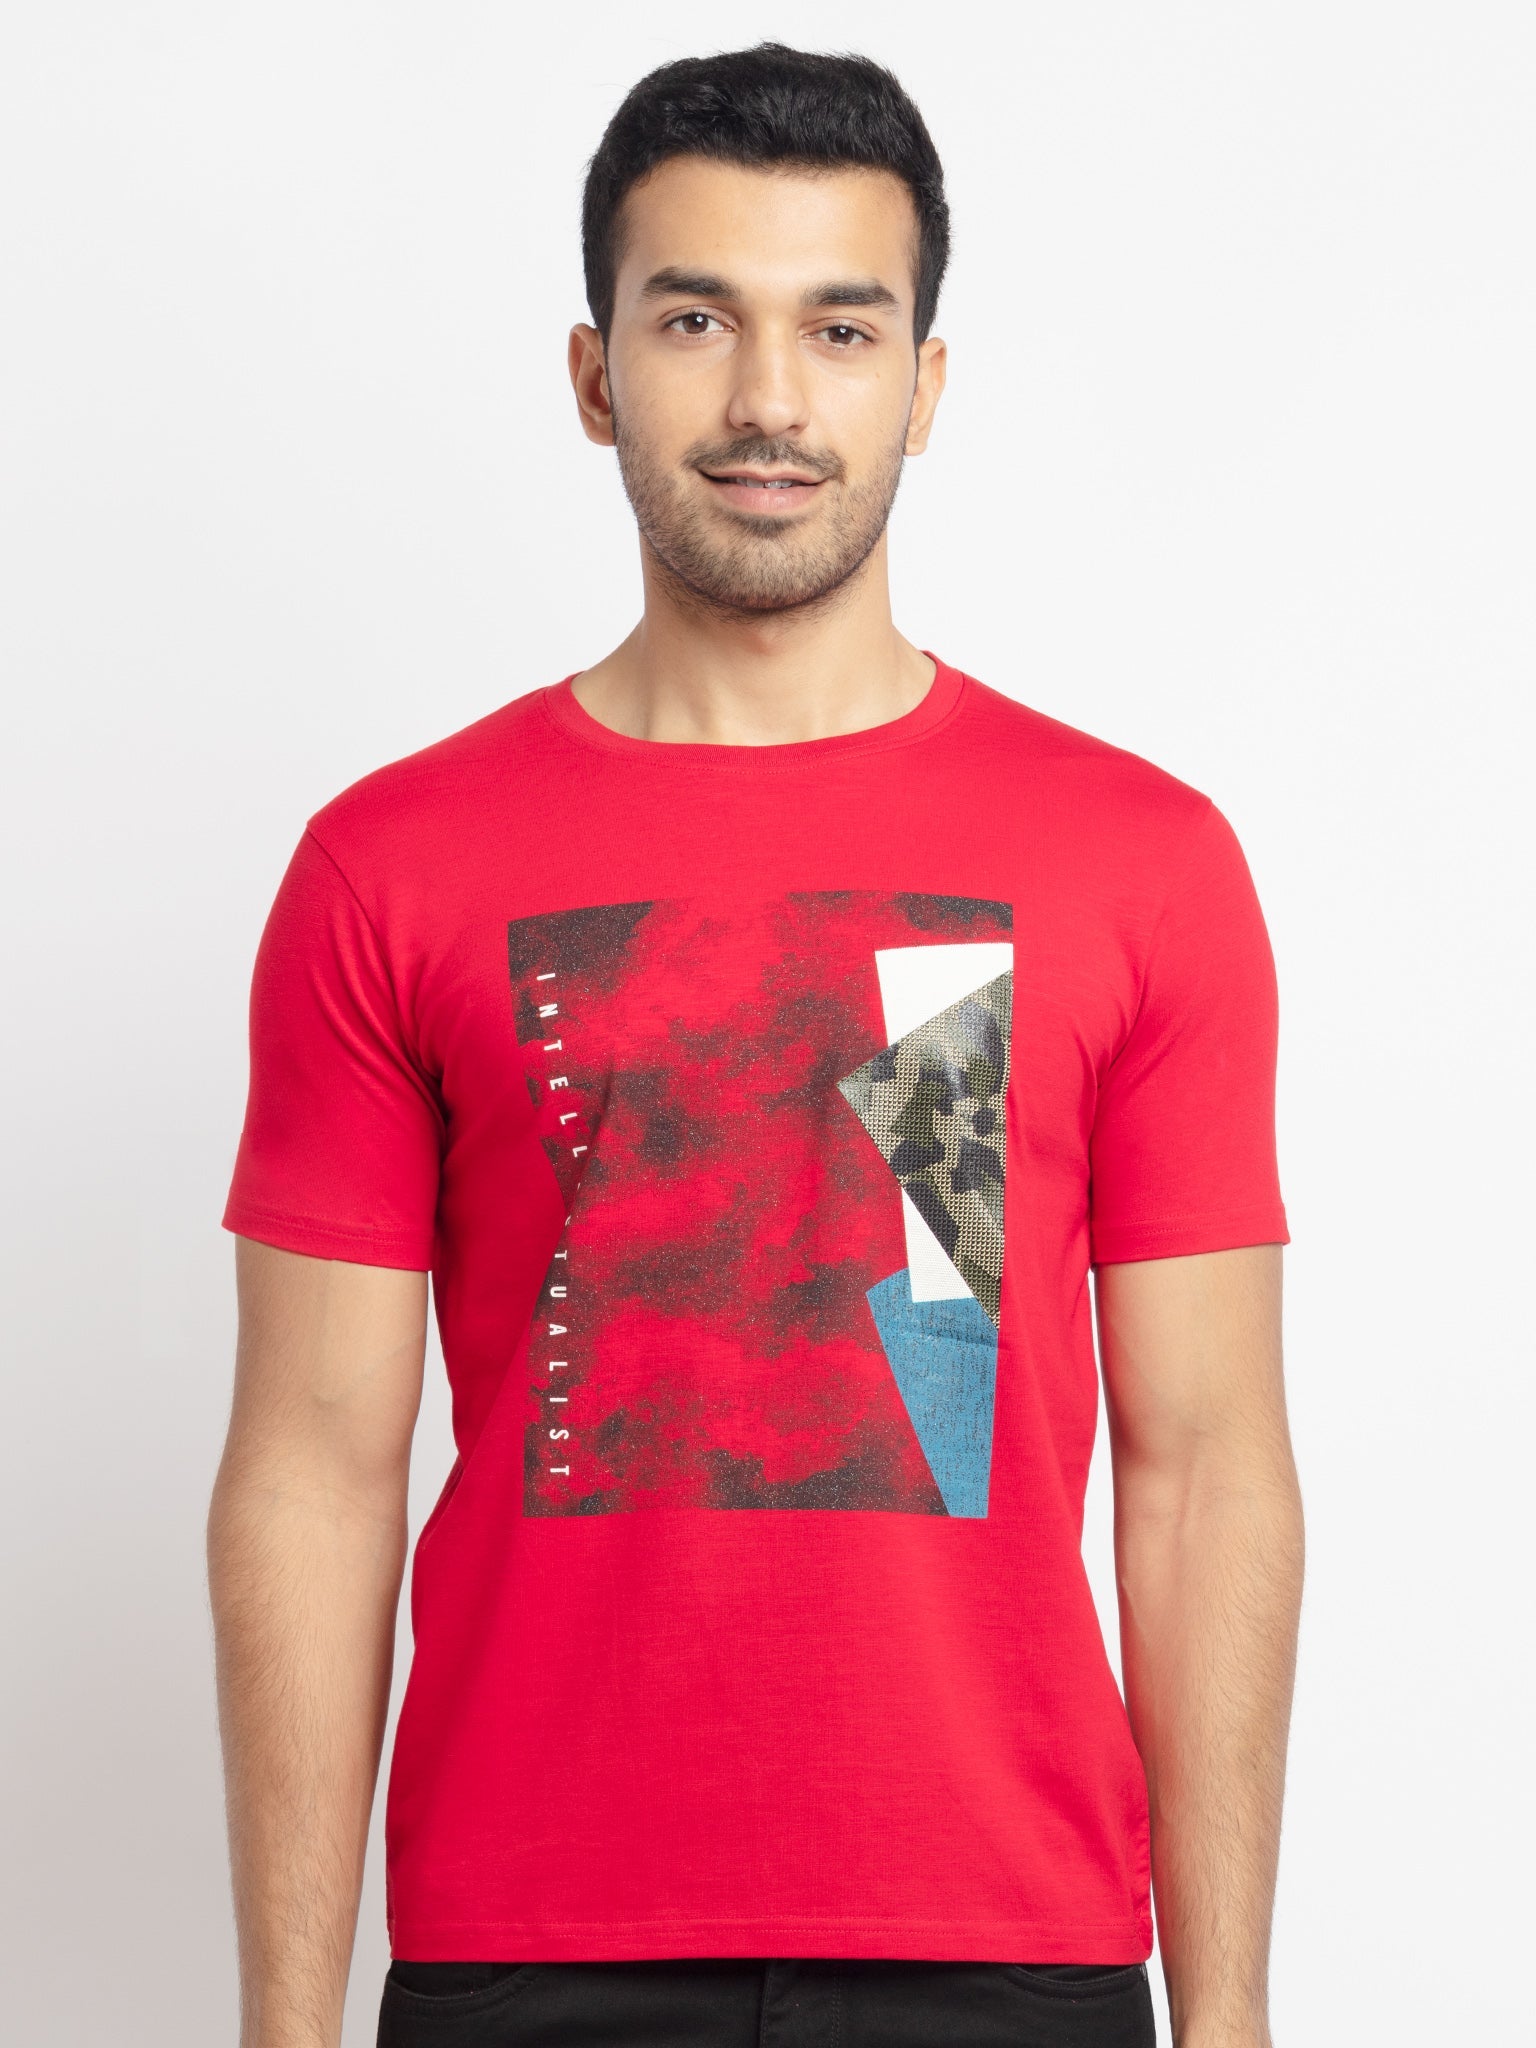 Status Quo |Printed Regular Fit Round Neck T-shirt - S, M, L, XL, XXL